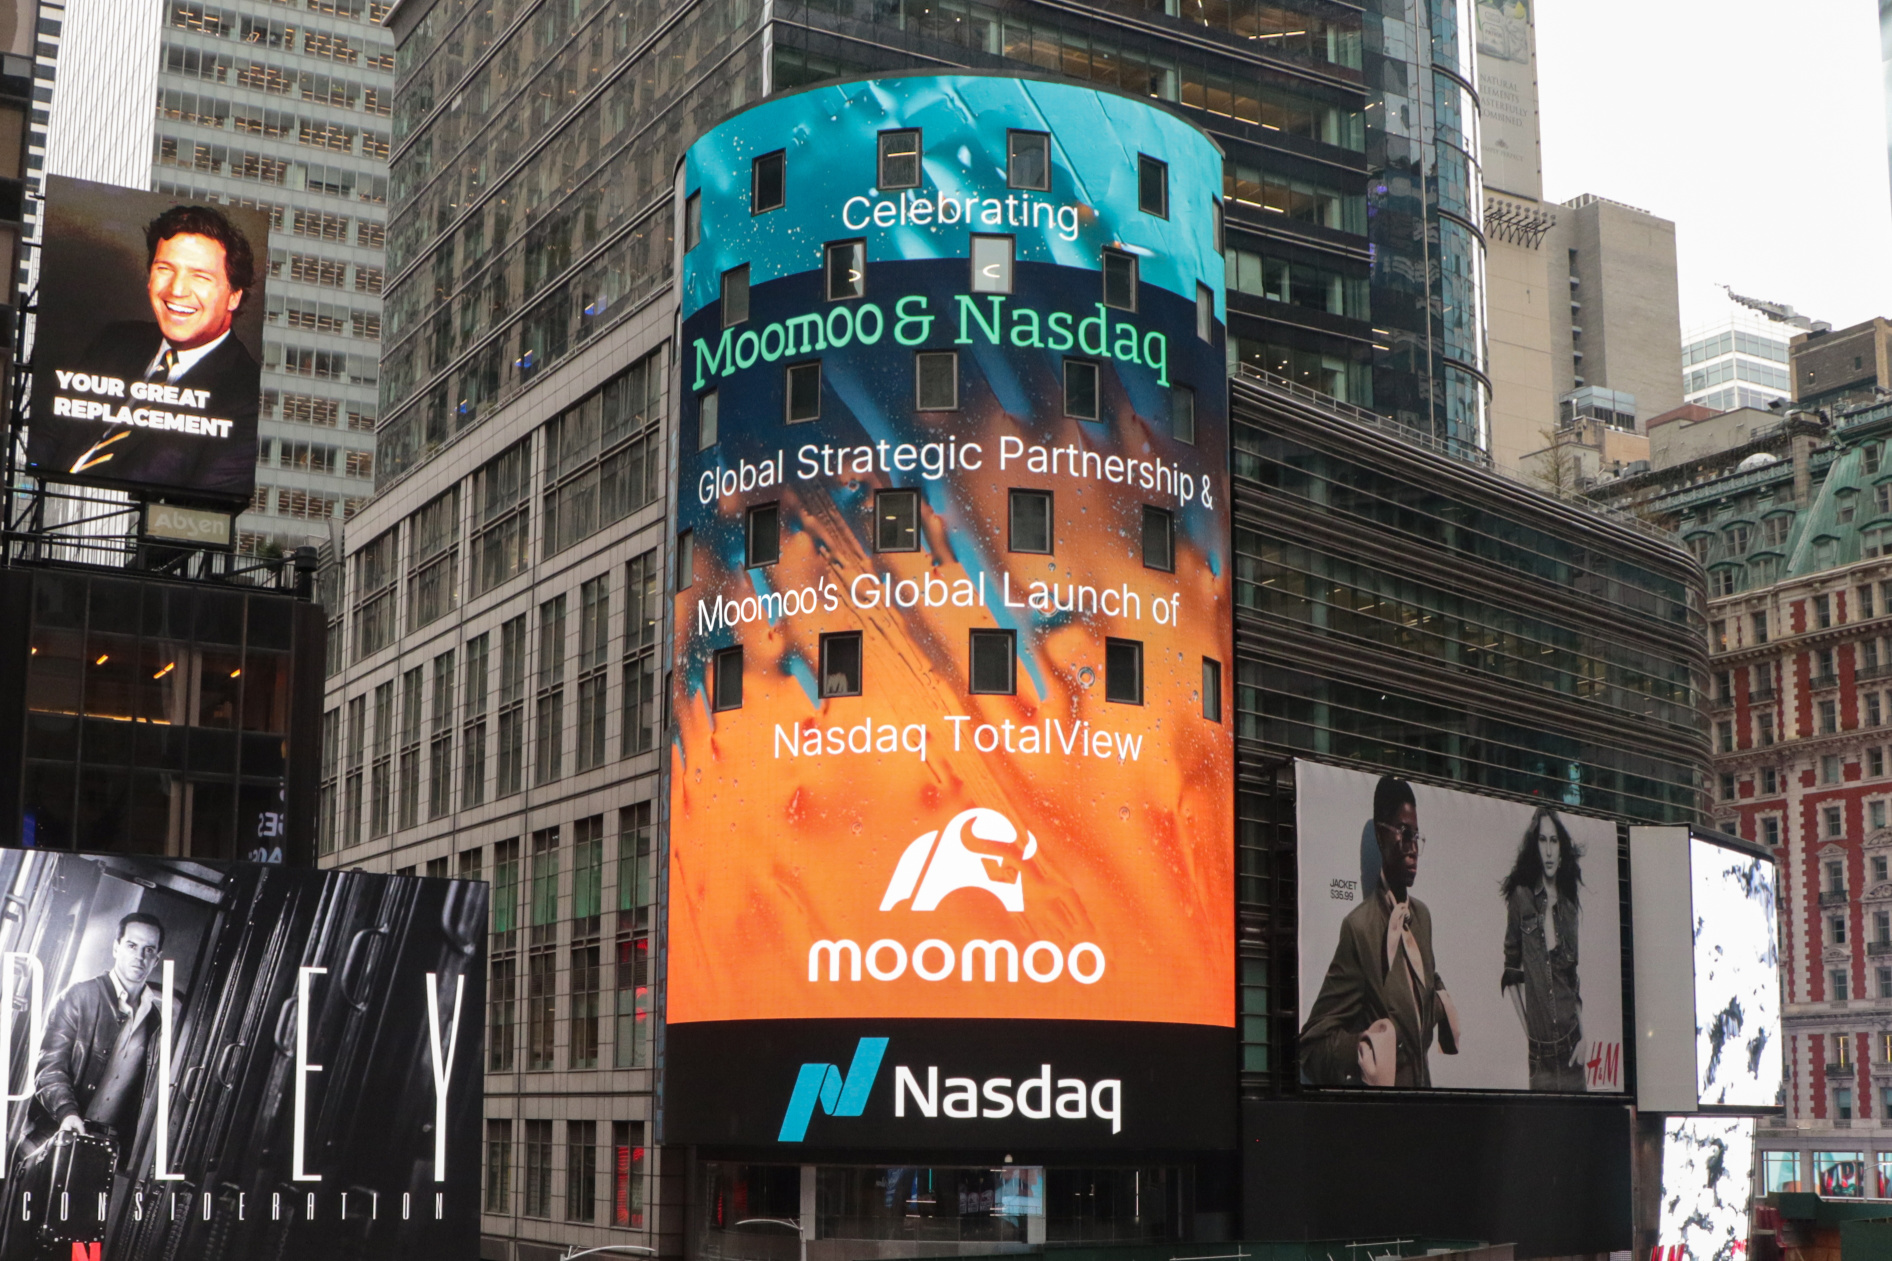 Moomoo and Nasdaq mark 6 years of global strategic partnership, reaffirming commitment to empowering investors